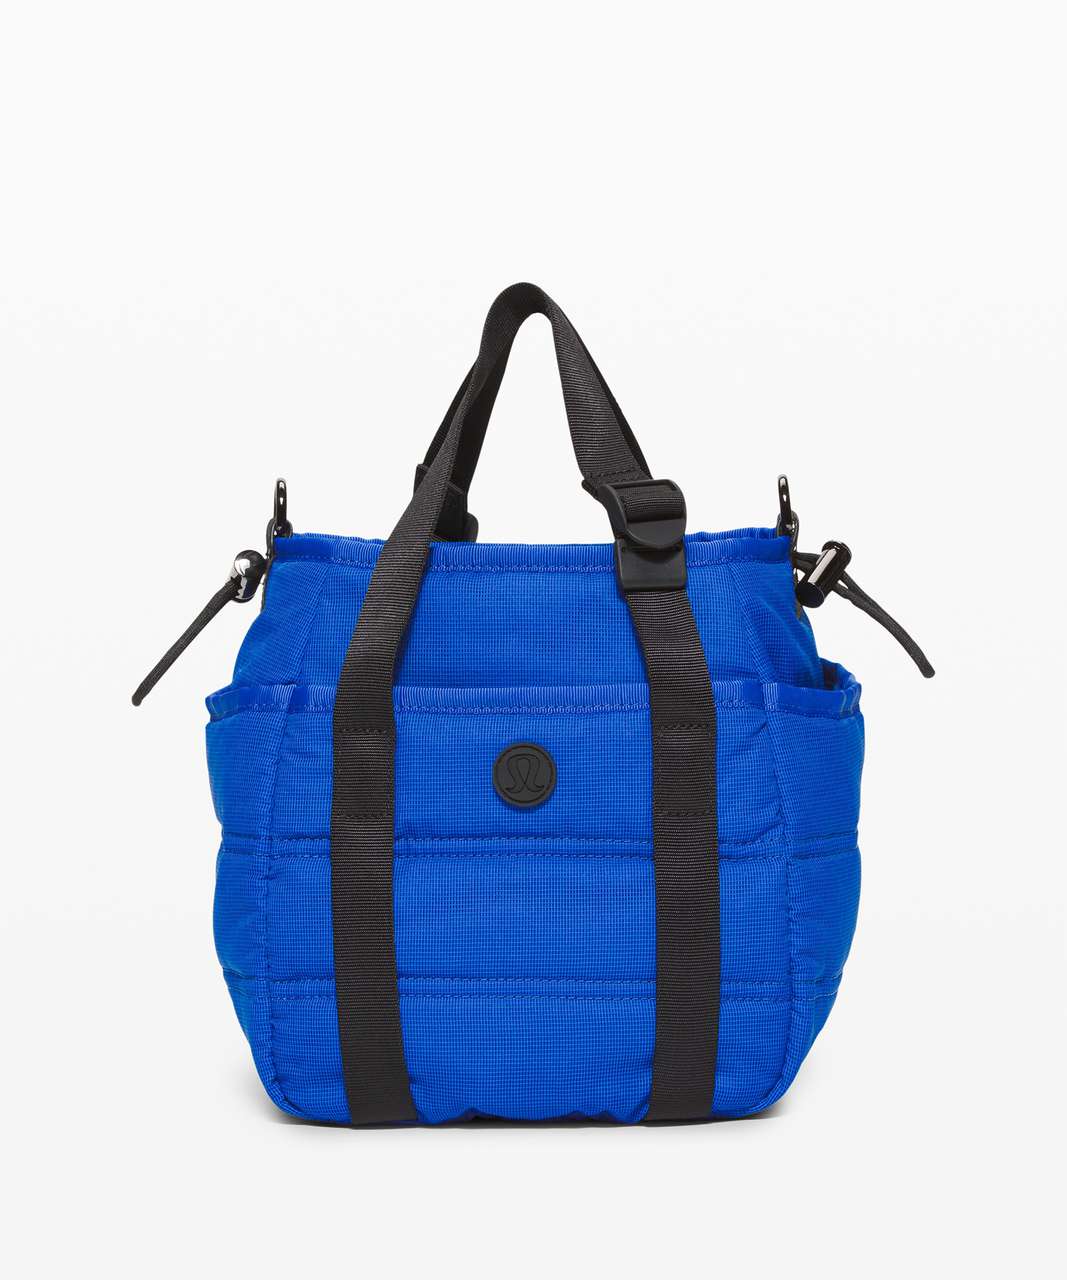 Lululemon Dash All Day Bucket Bag *6.5L - Wild Bluebell